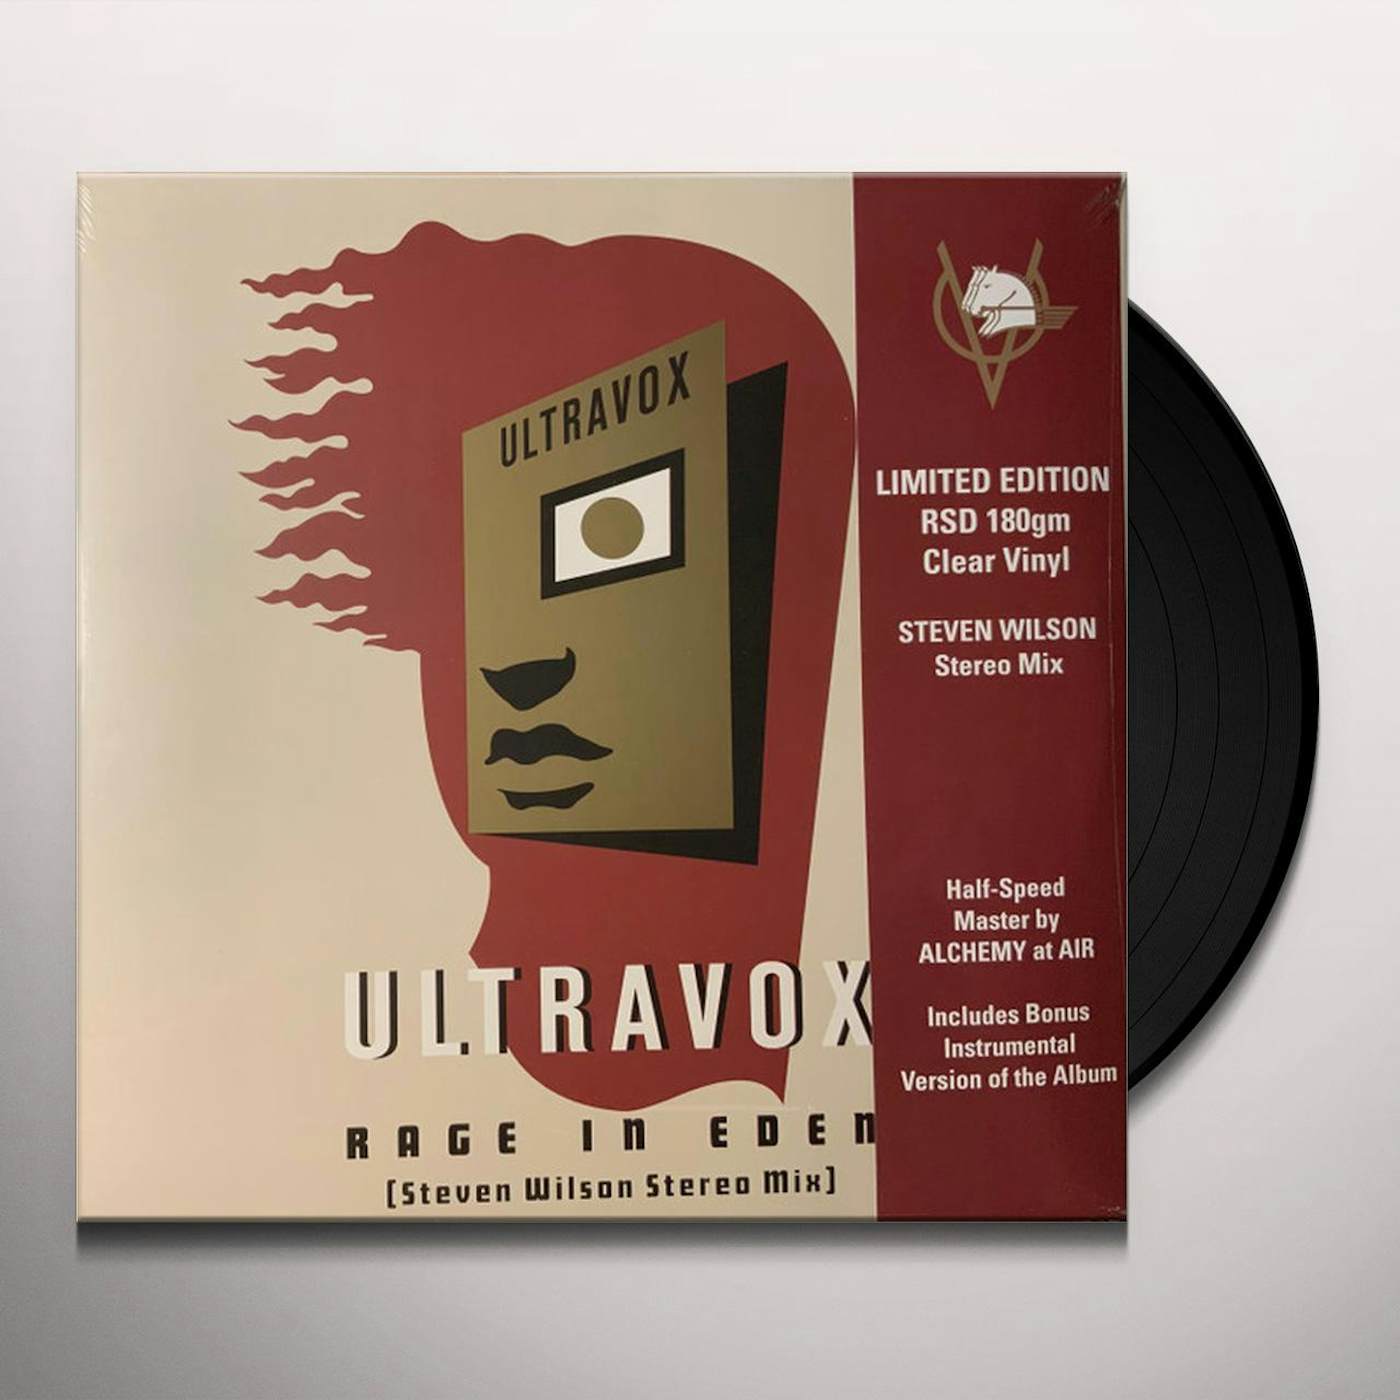 Ultravox RAGE IN EDEN (STEVEN WILSON STEREO MIX) (2LP) (RSD) Vinyl Record